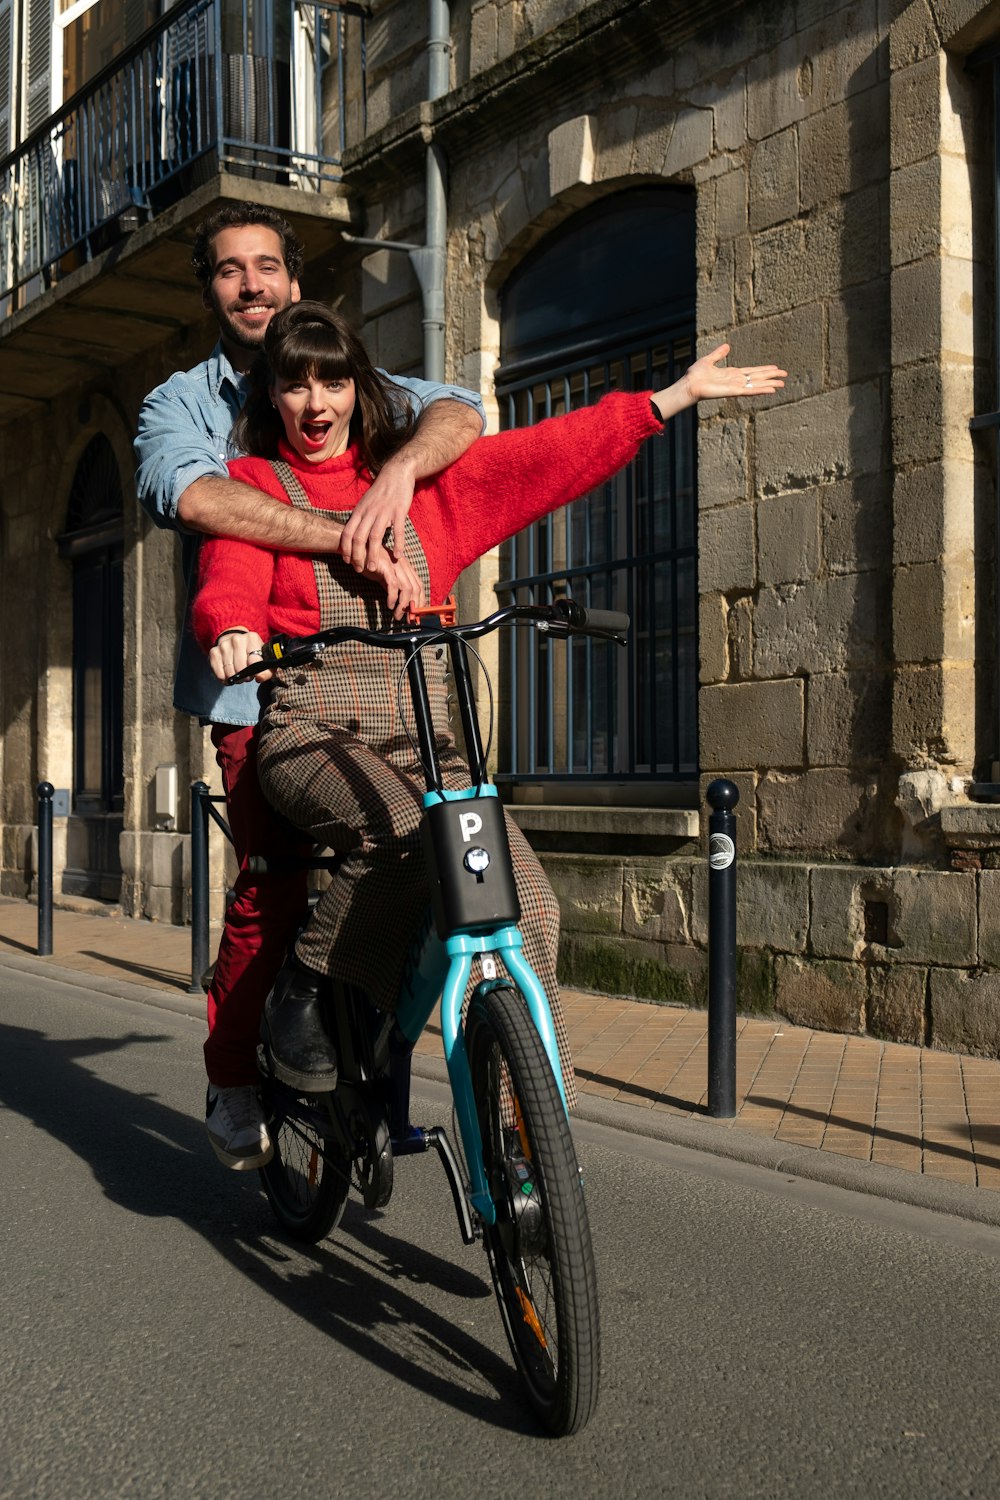 a man and woman riding a bike down a street